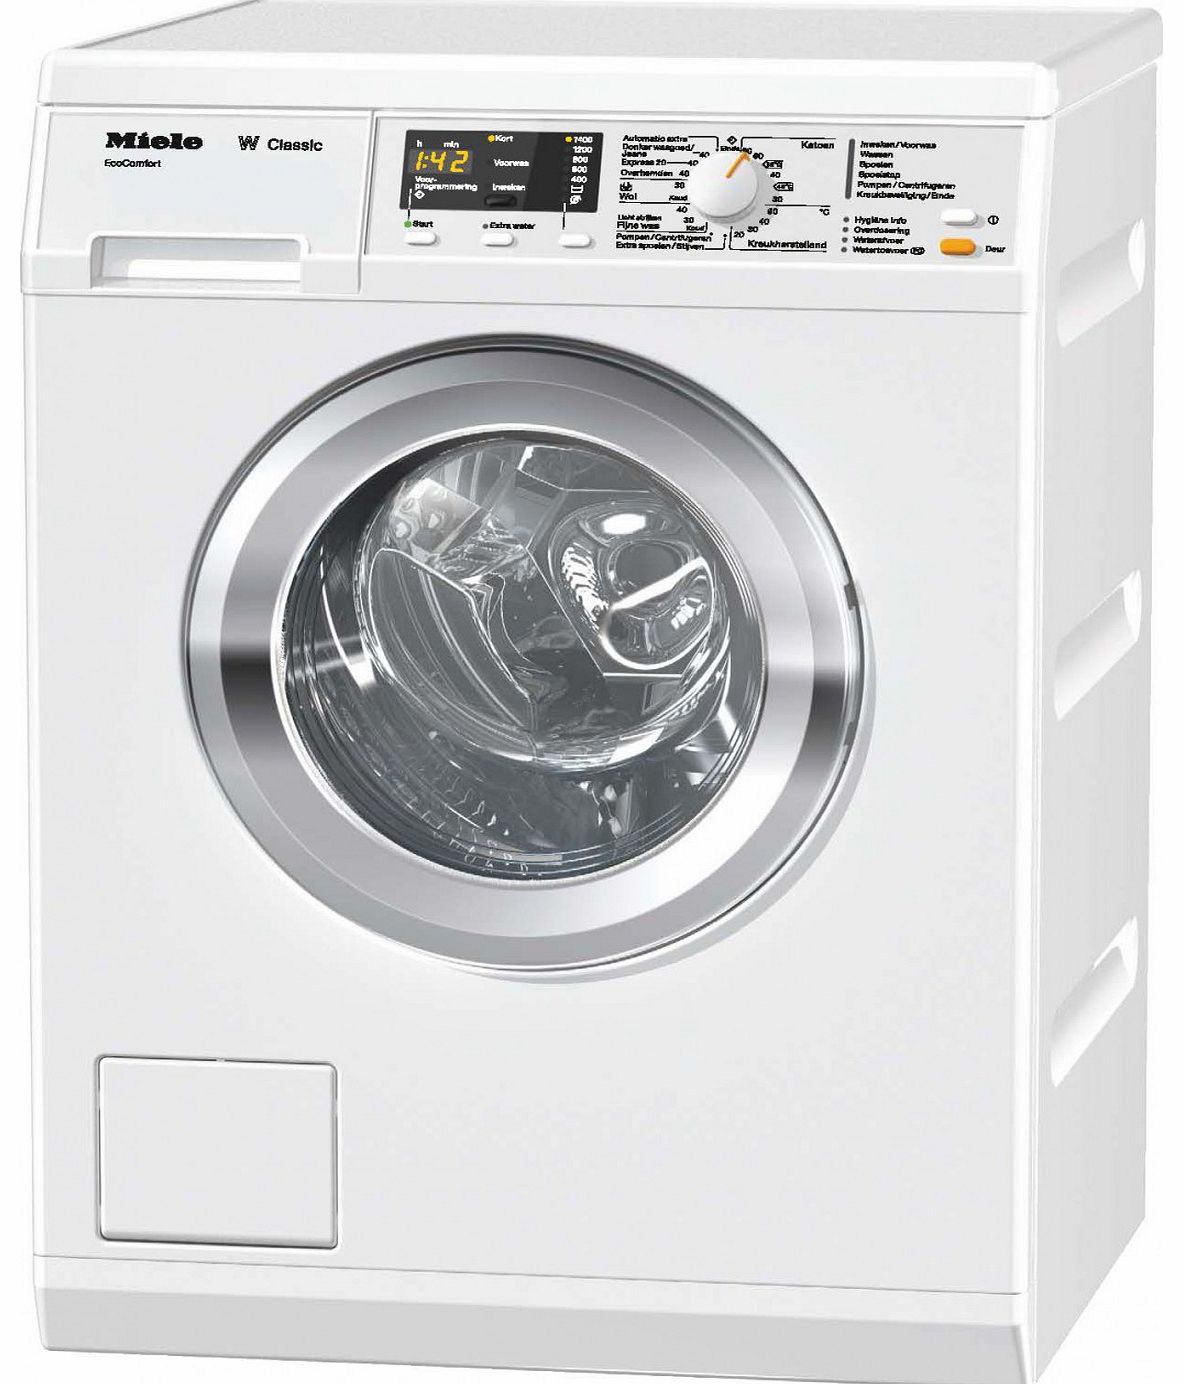 WDA210 Washing Machines